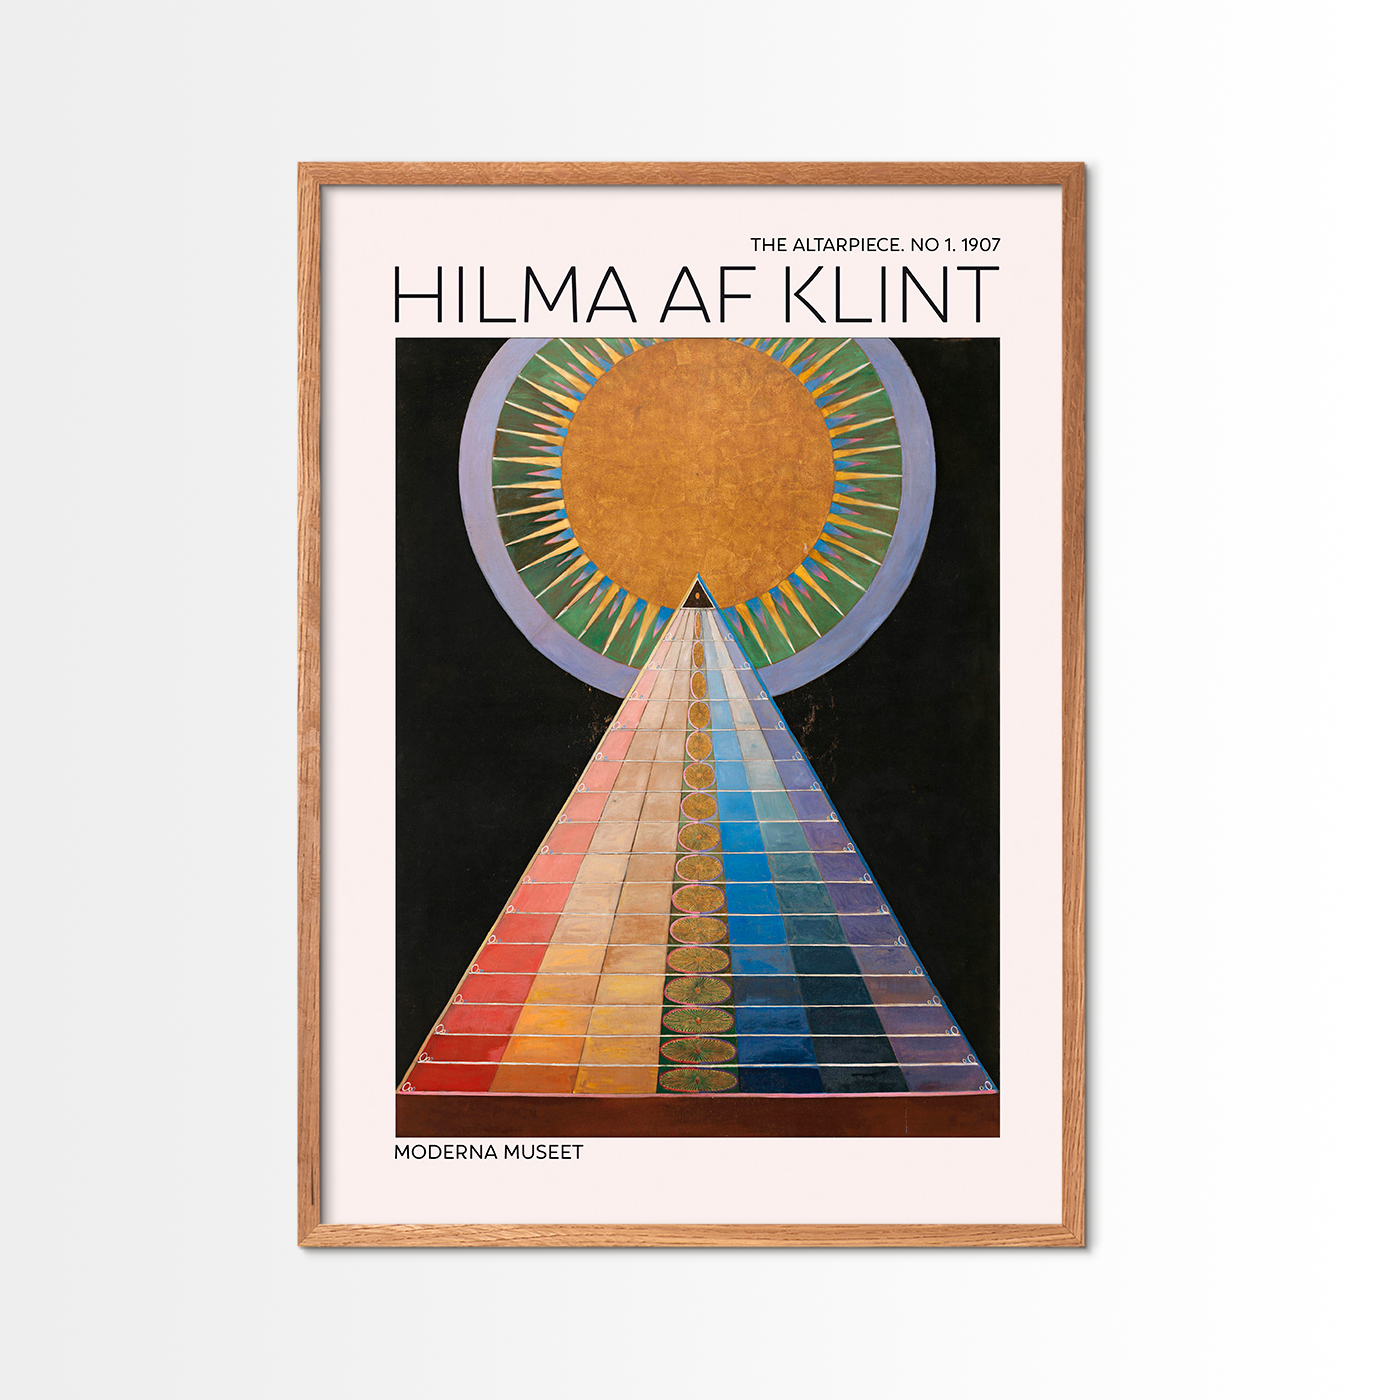 The Altarpiece No. 1 - Hilma Of Klint